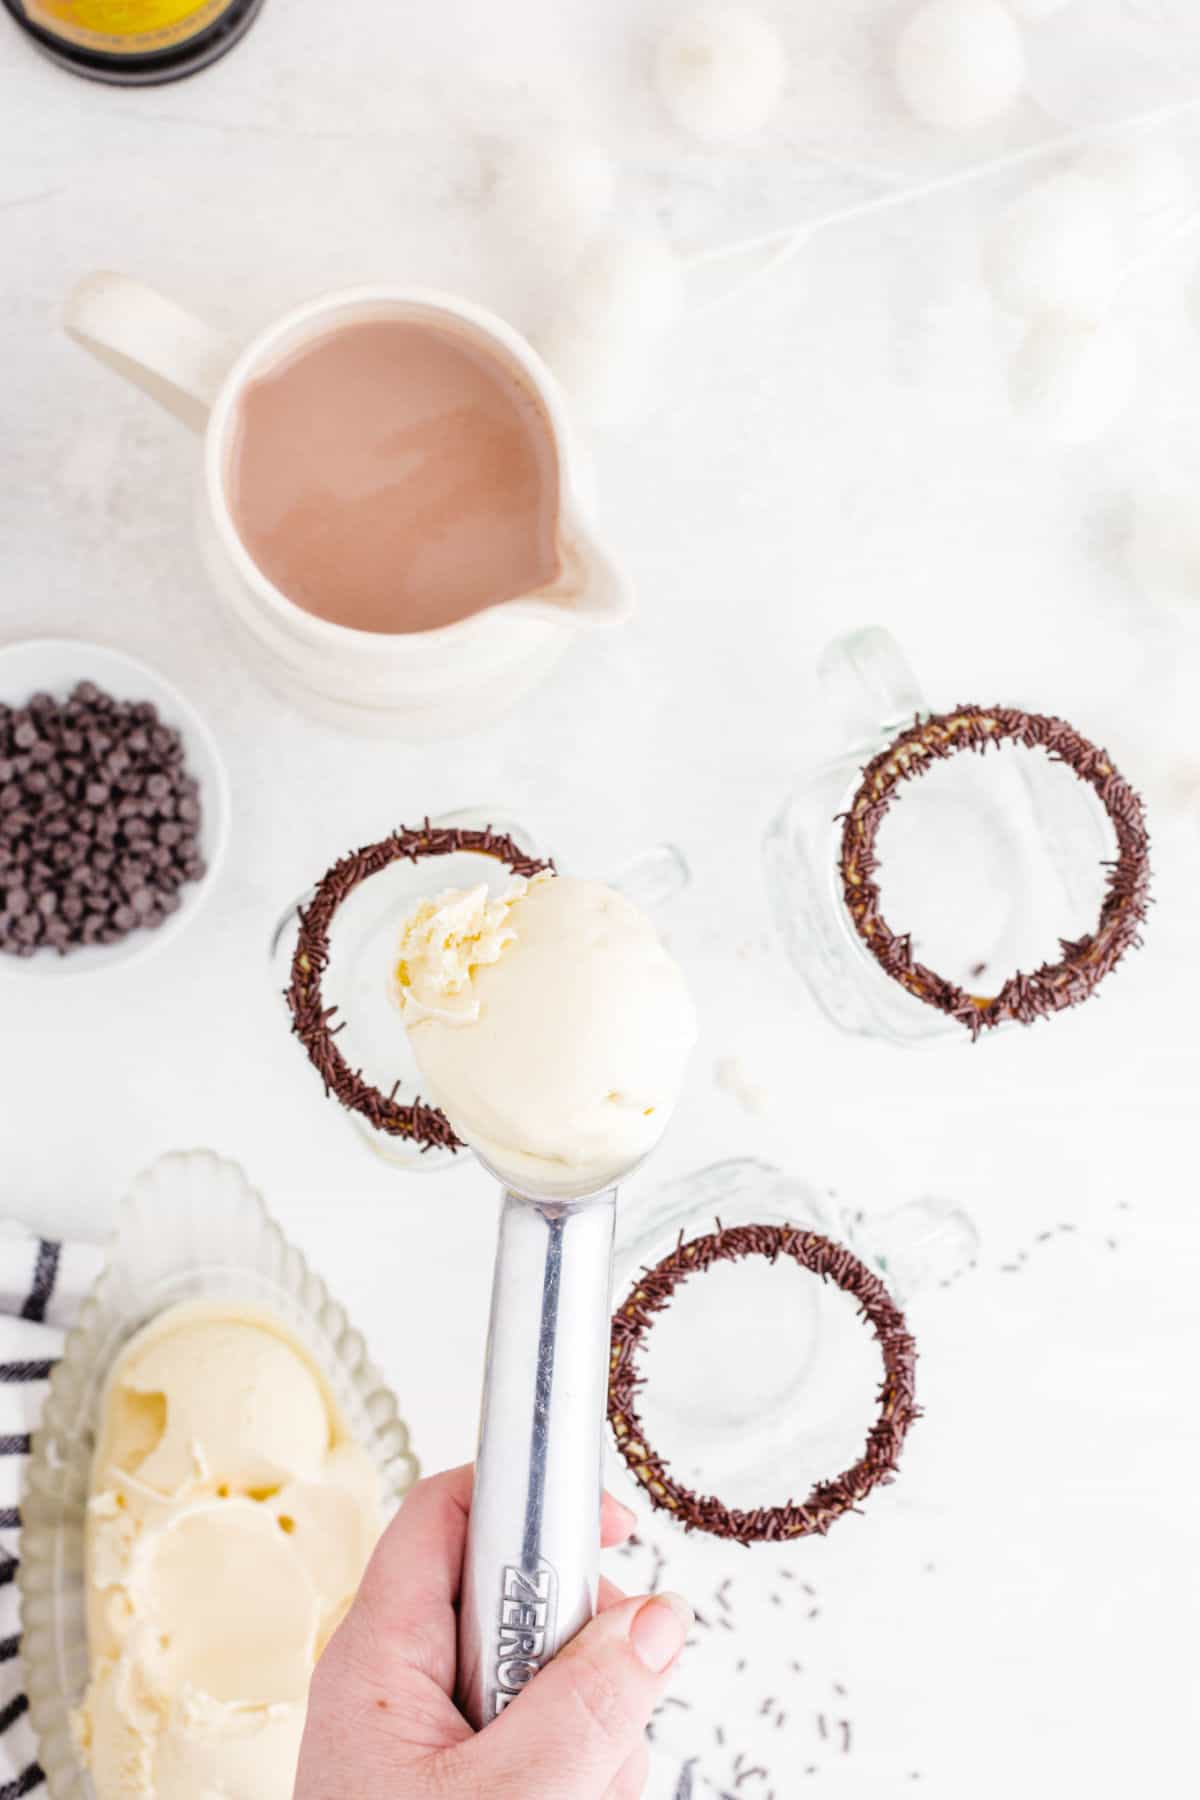 scoop ice cream into mug